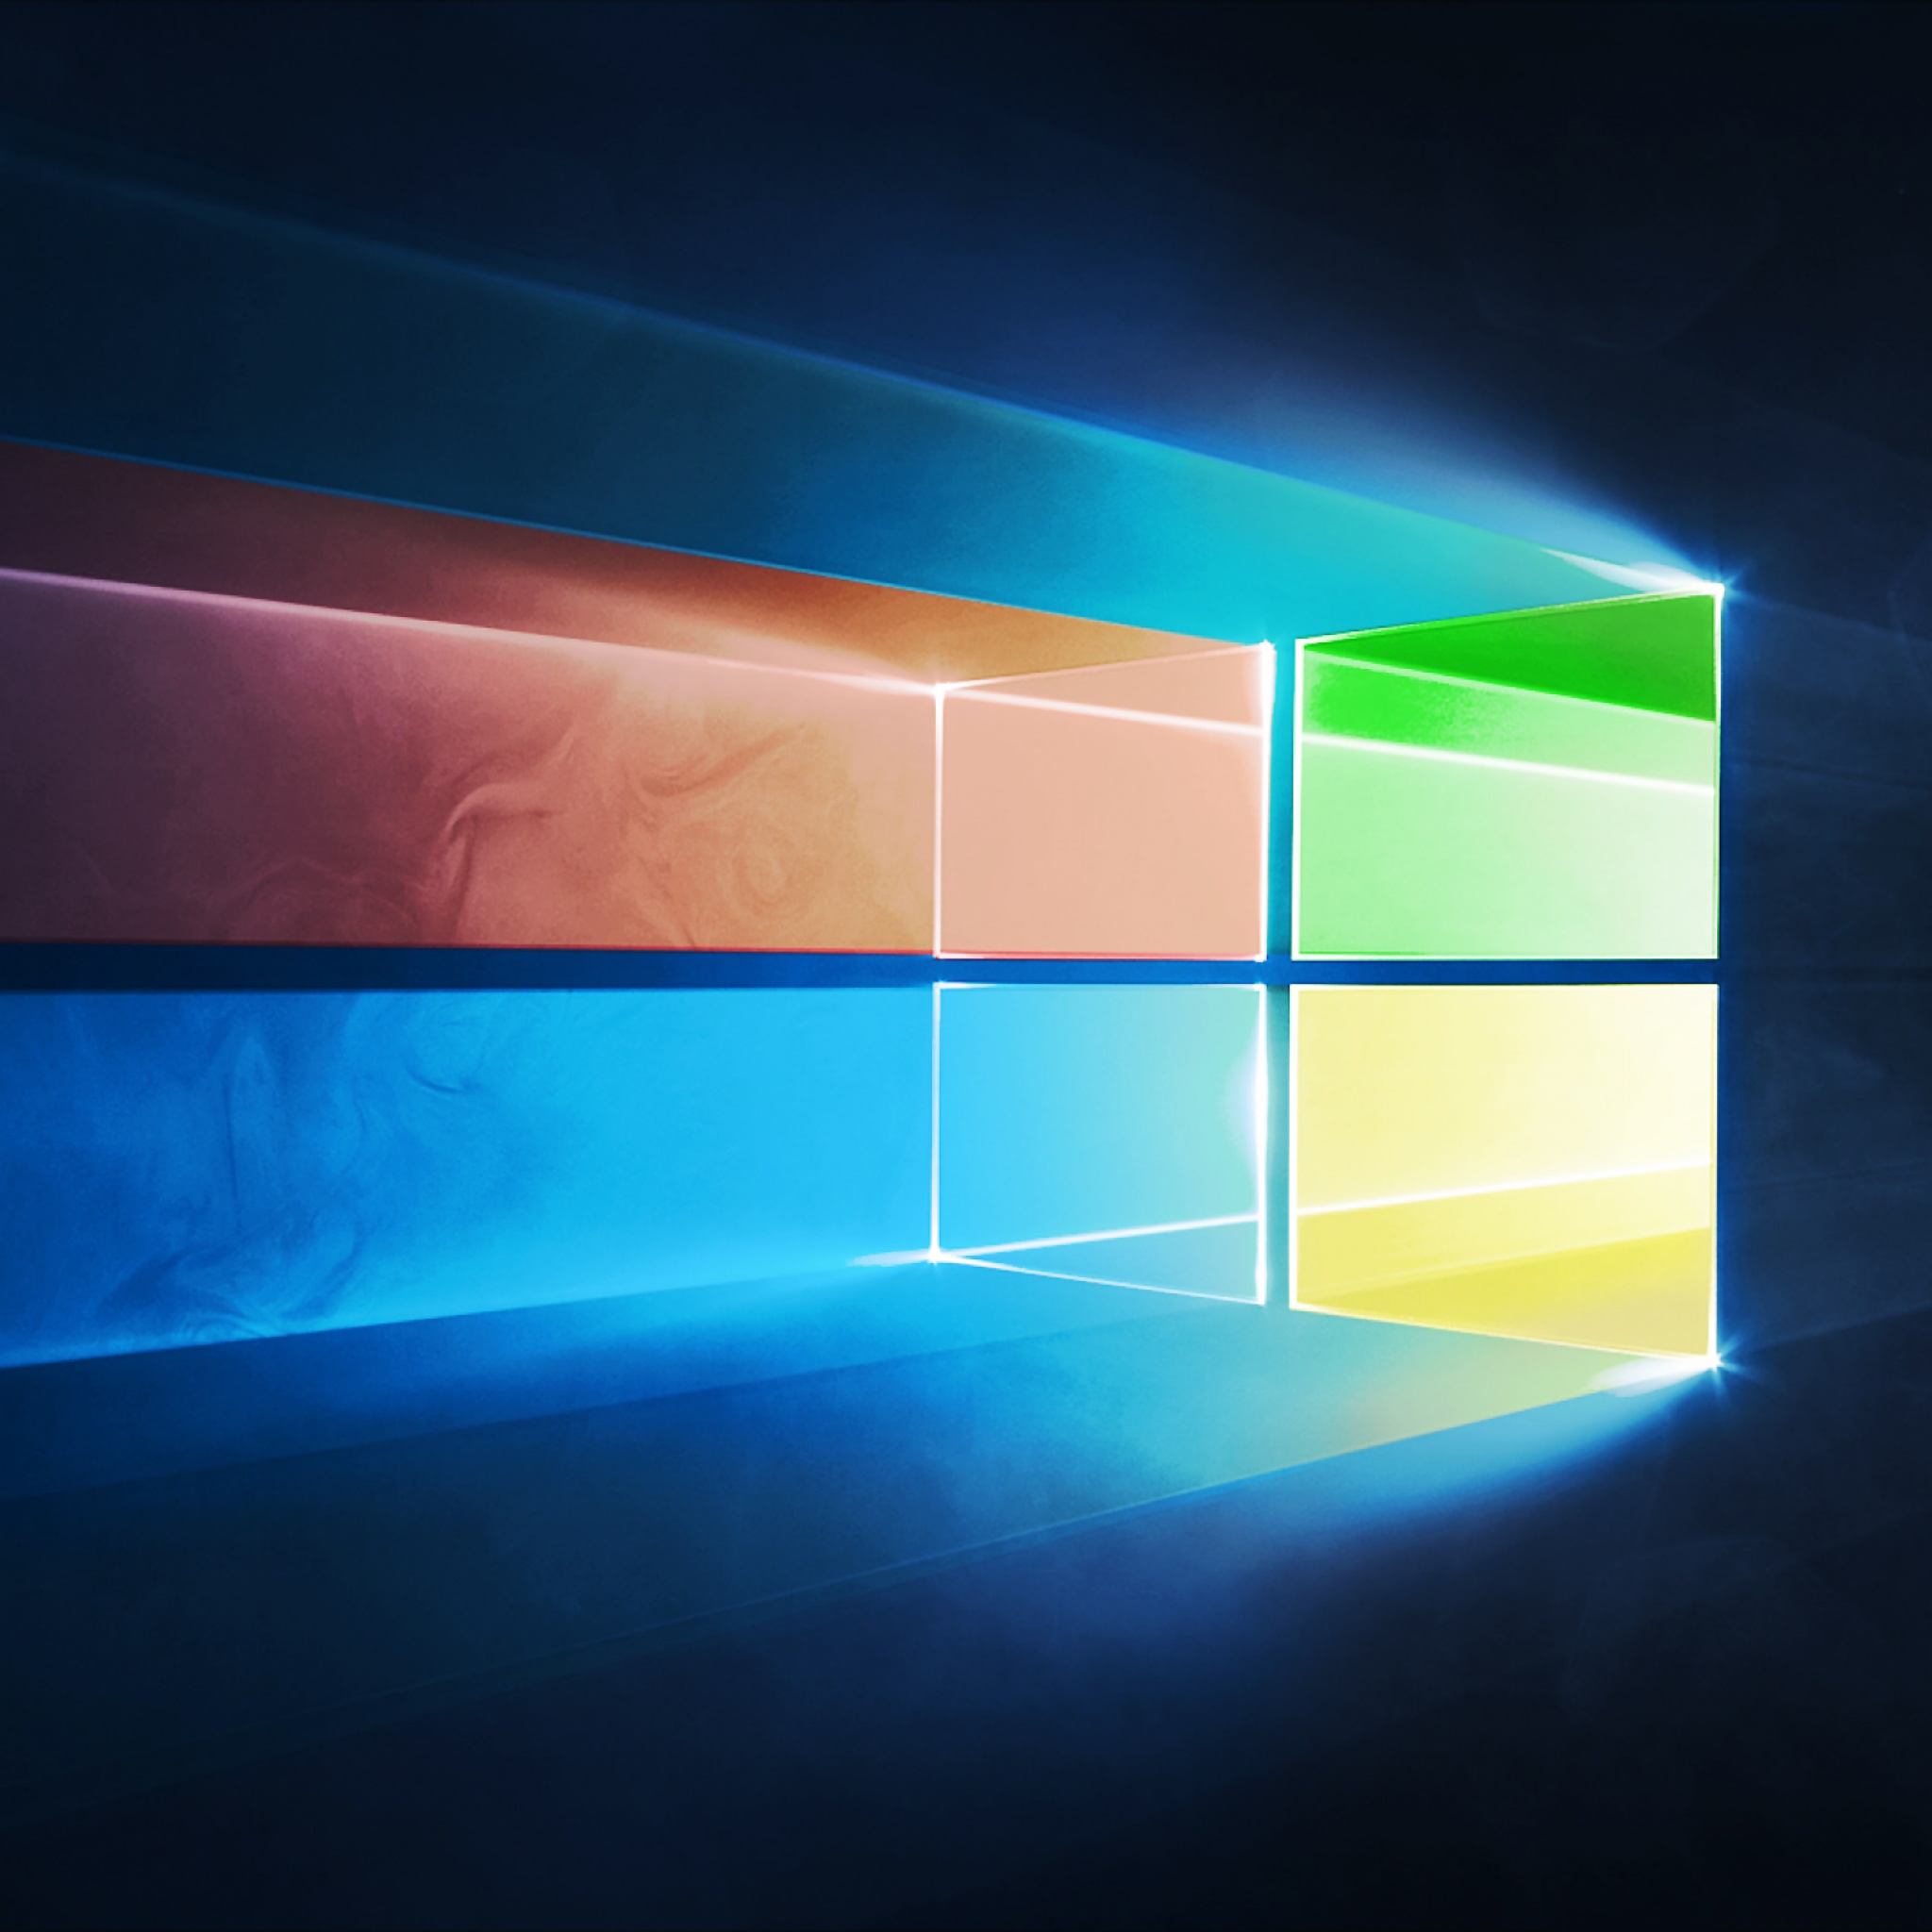 Microsoft Windows 4K Wallpaper, Windows 10, Colorful, Blue ...